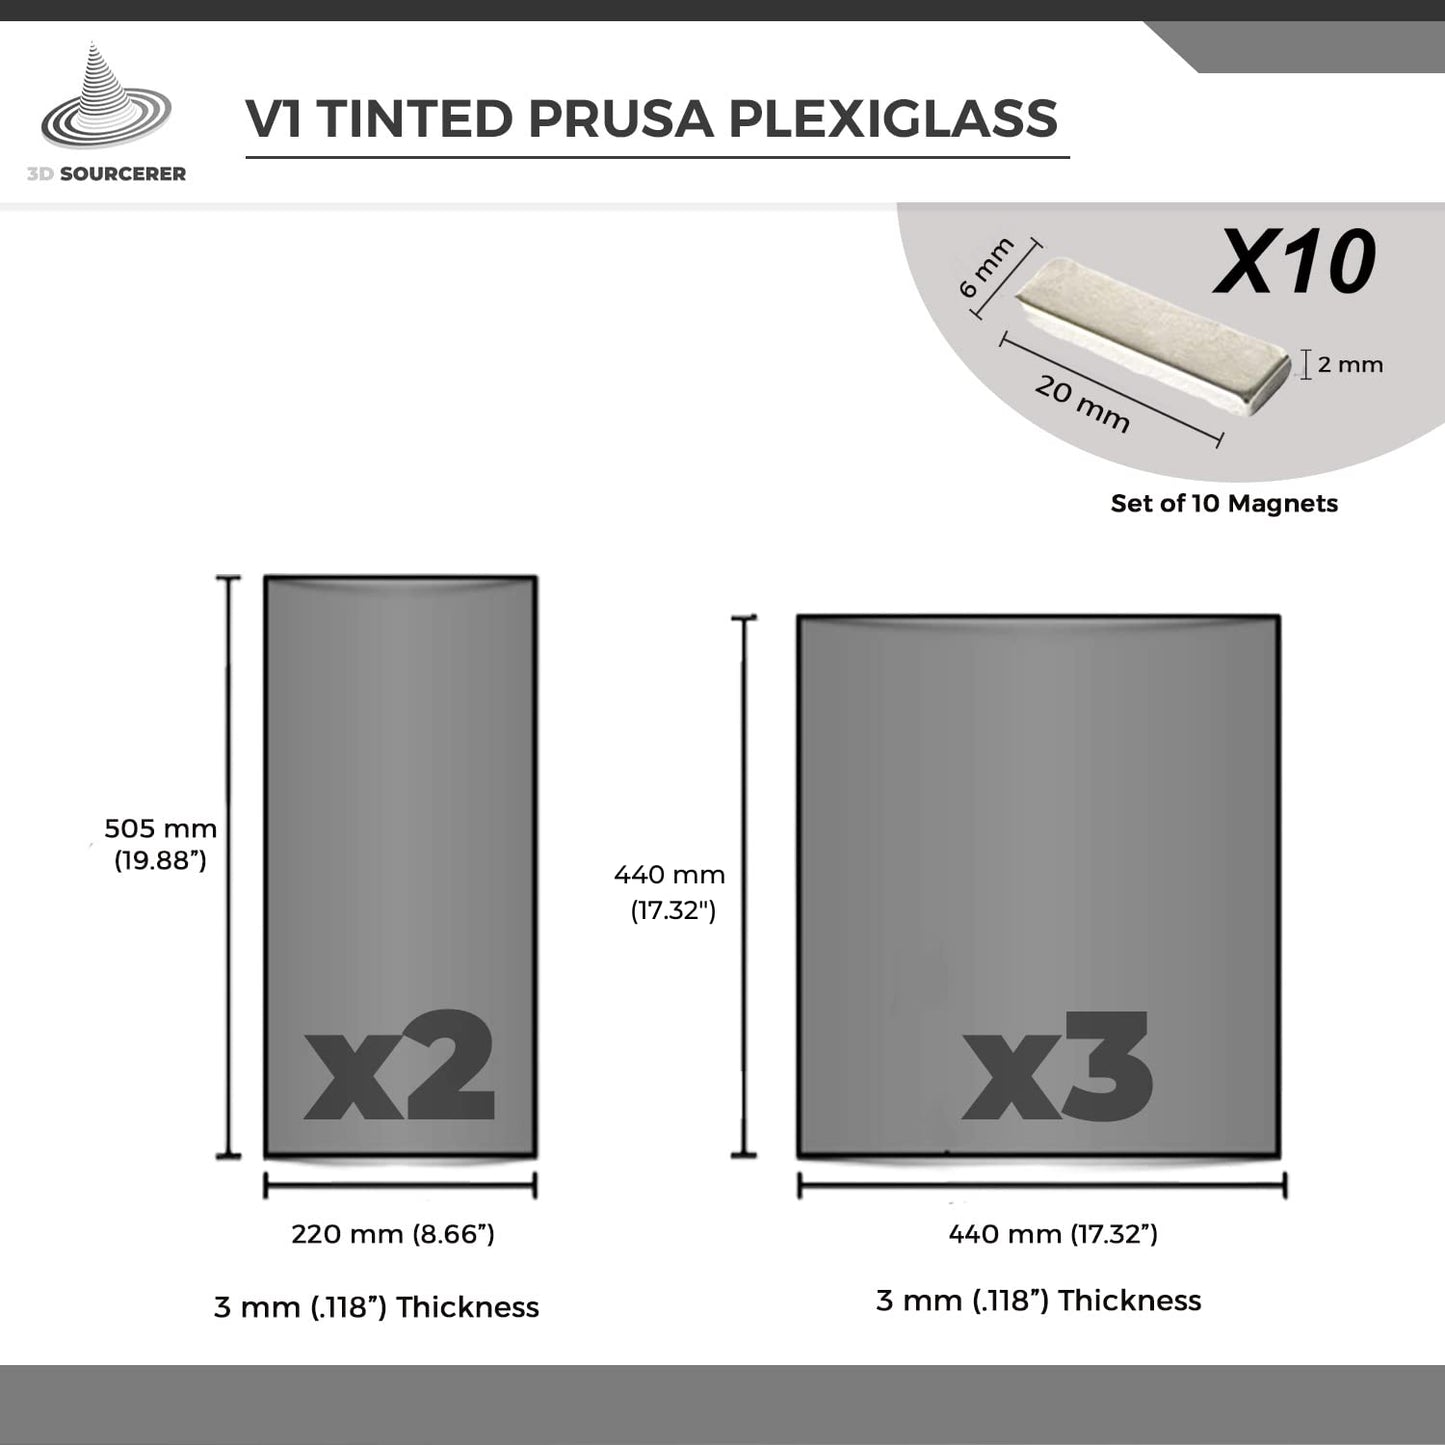 V1 Prusa IKEA Lack Plexiglass Enclosure Kit with Magnets